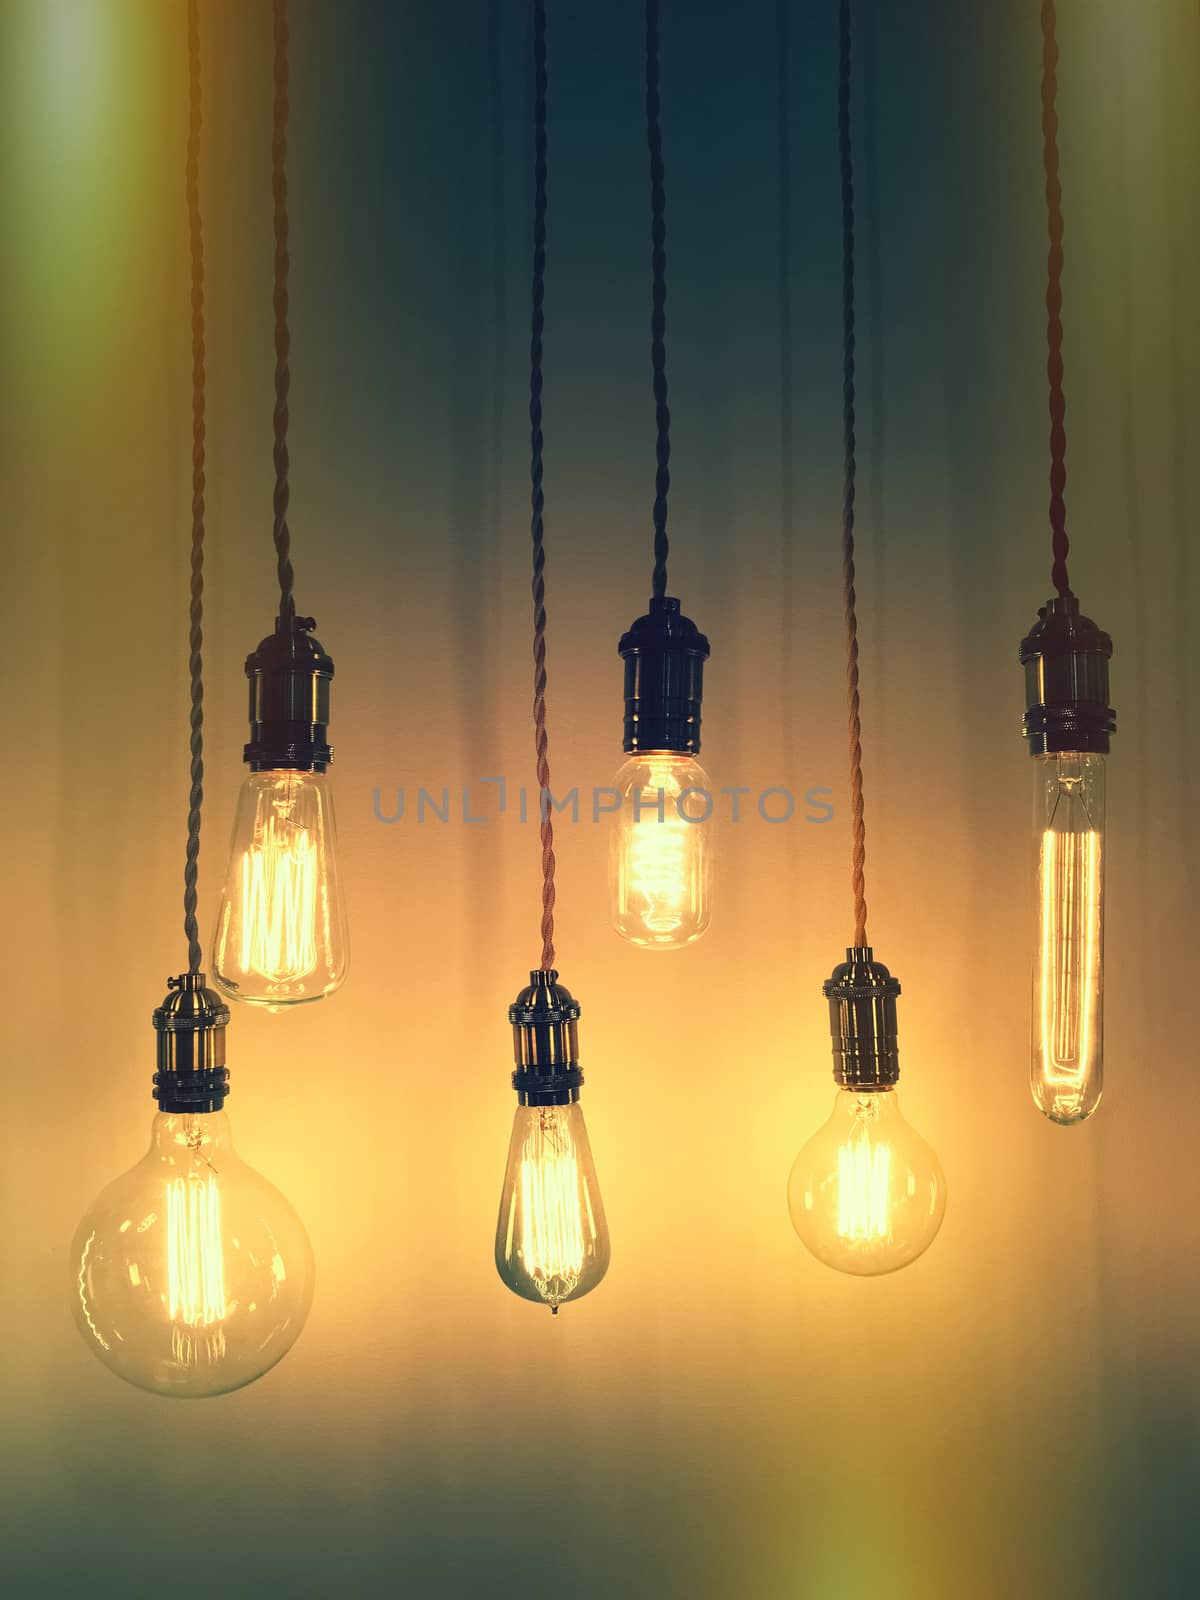 Retro style light bulbs by anikasalsera